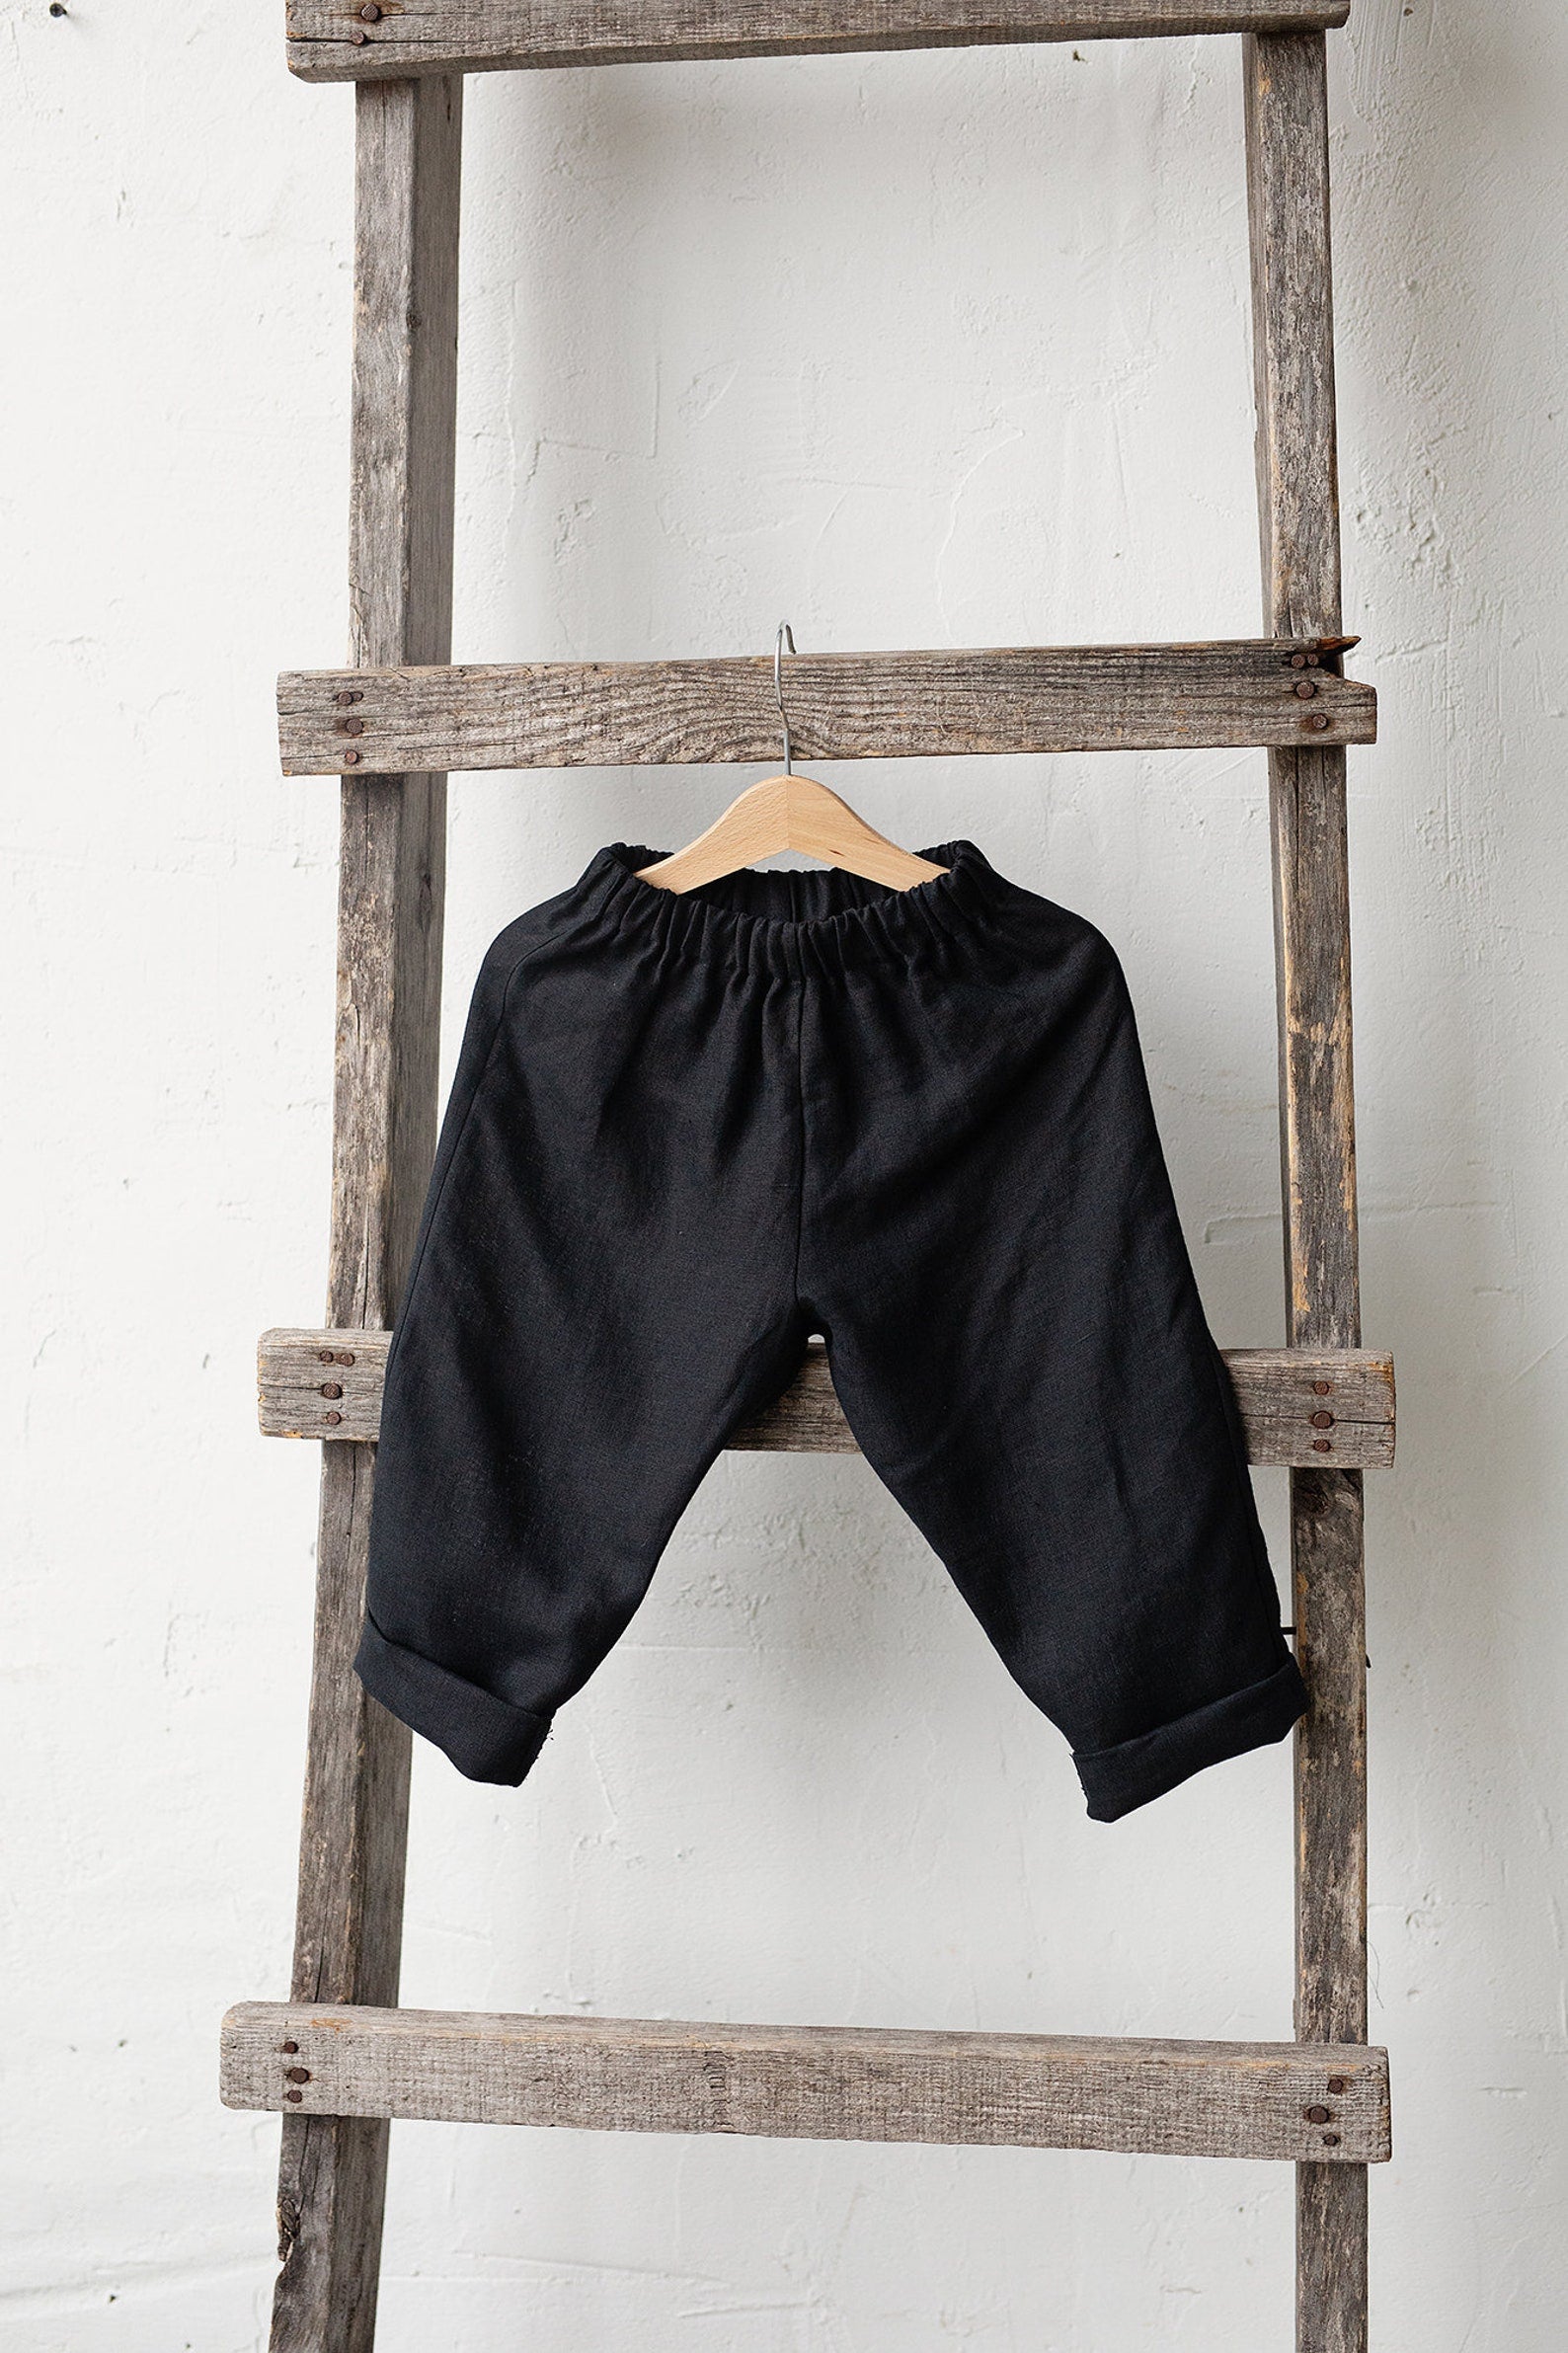 Black Linen Pants